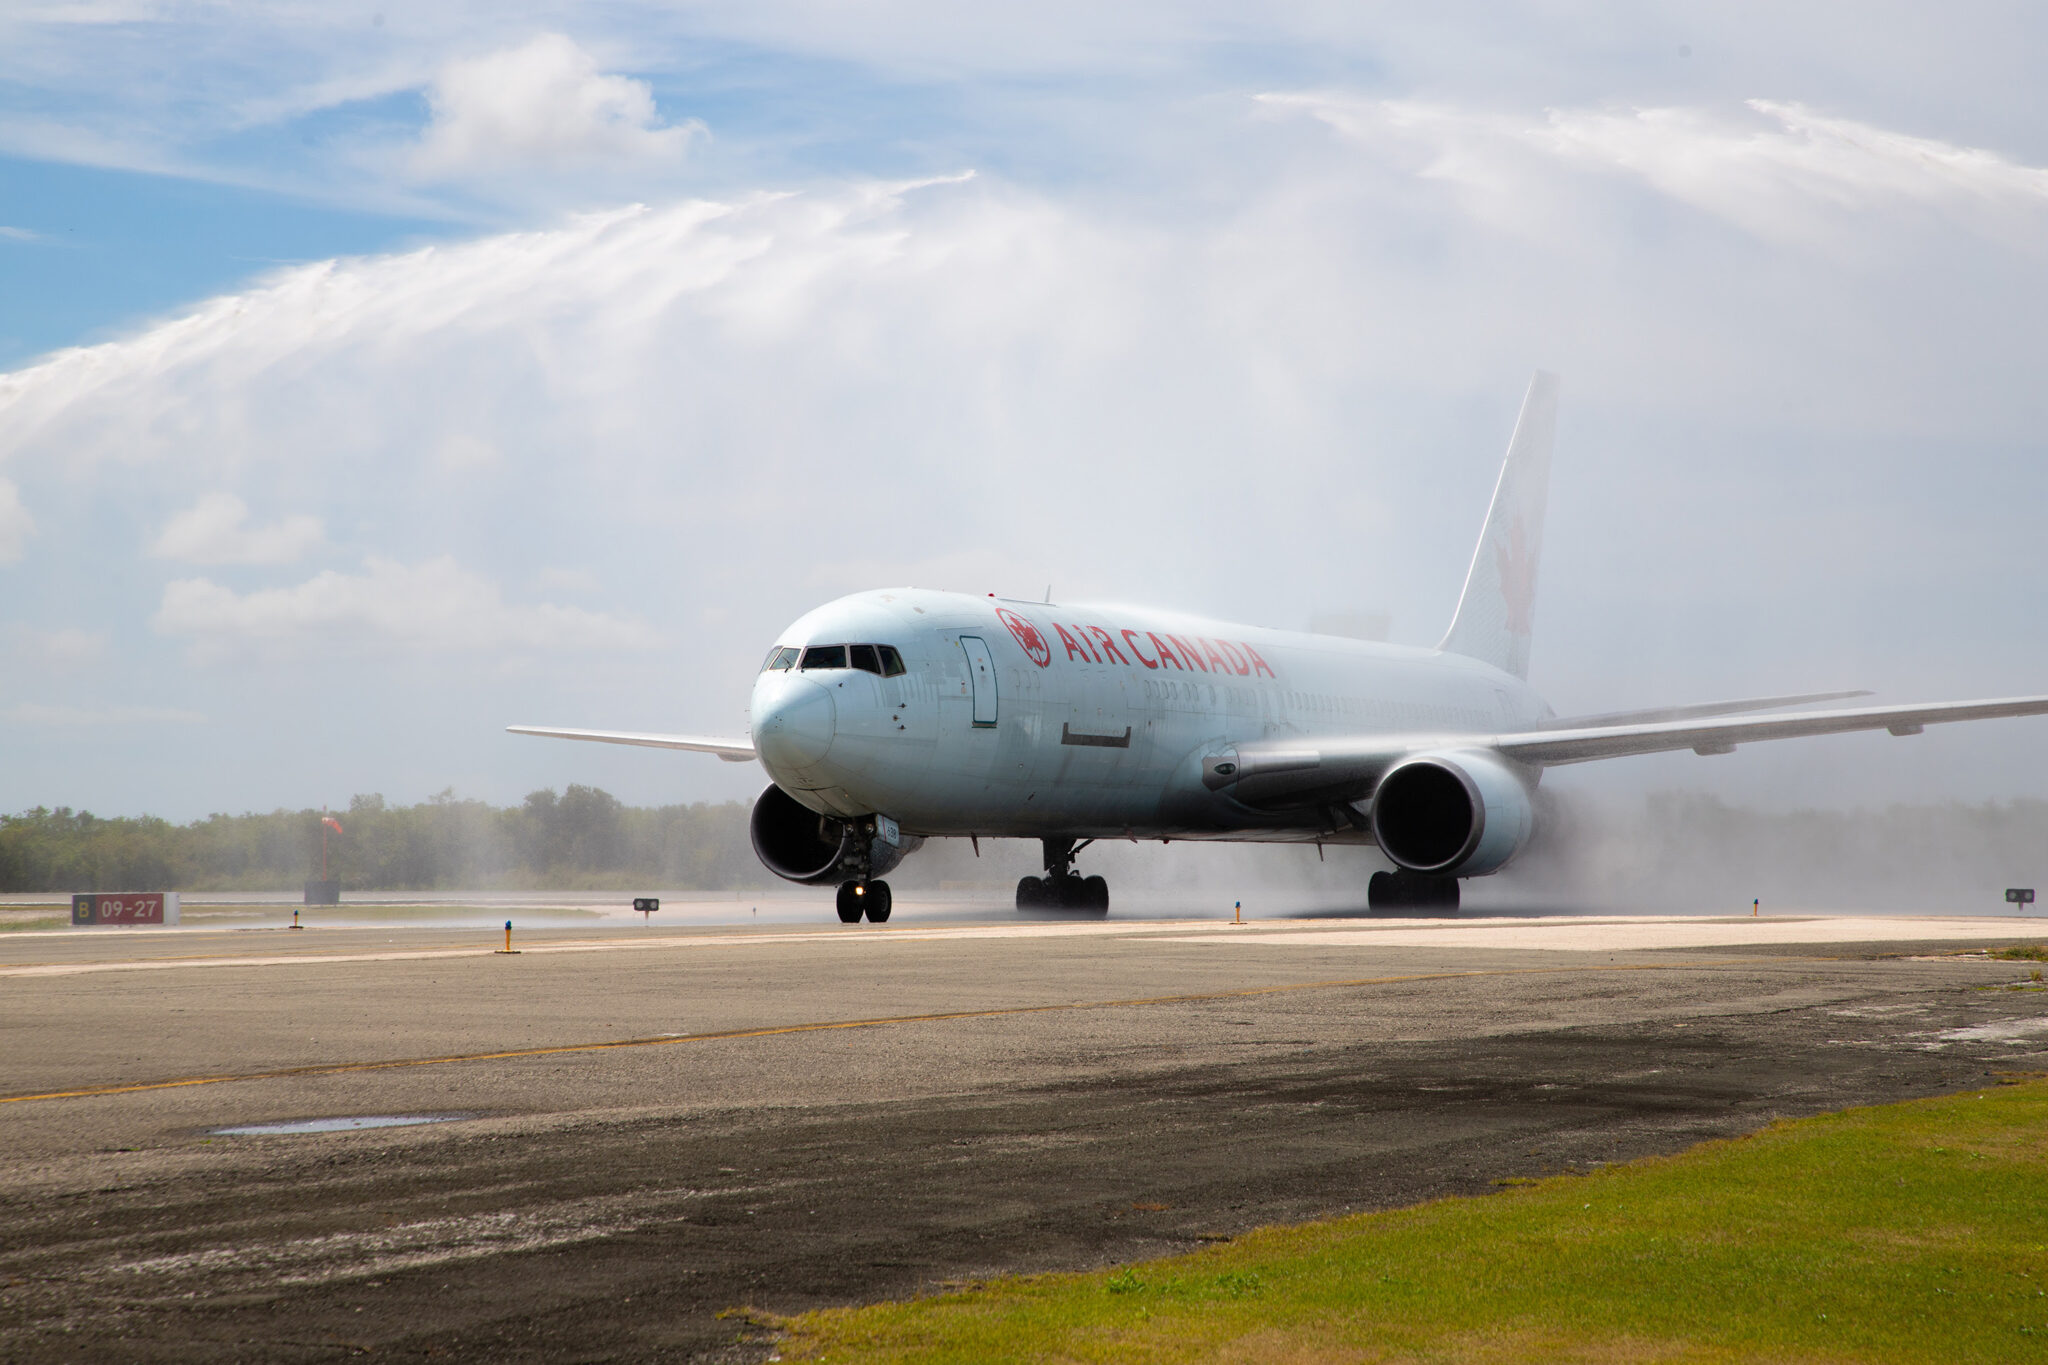 First Air Canada Cargo flight into Punta Cana